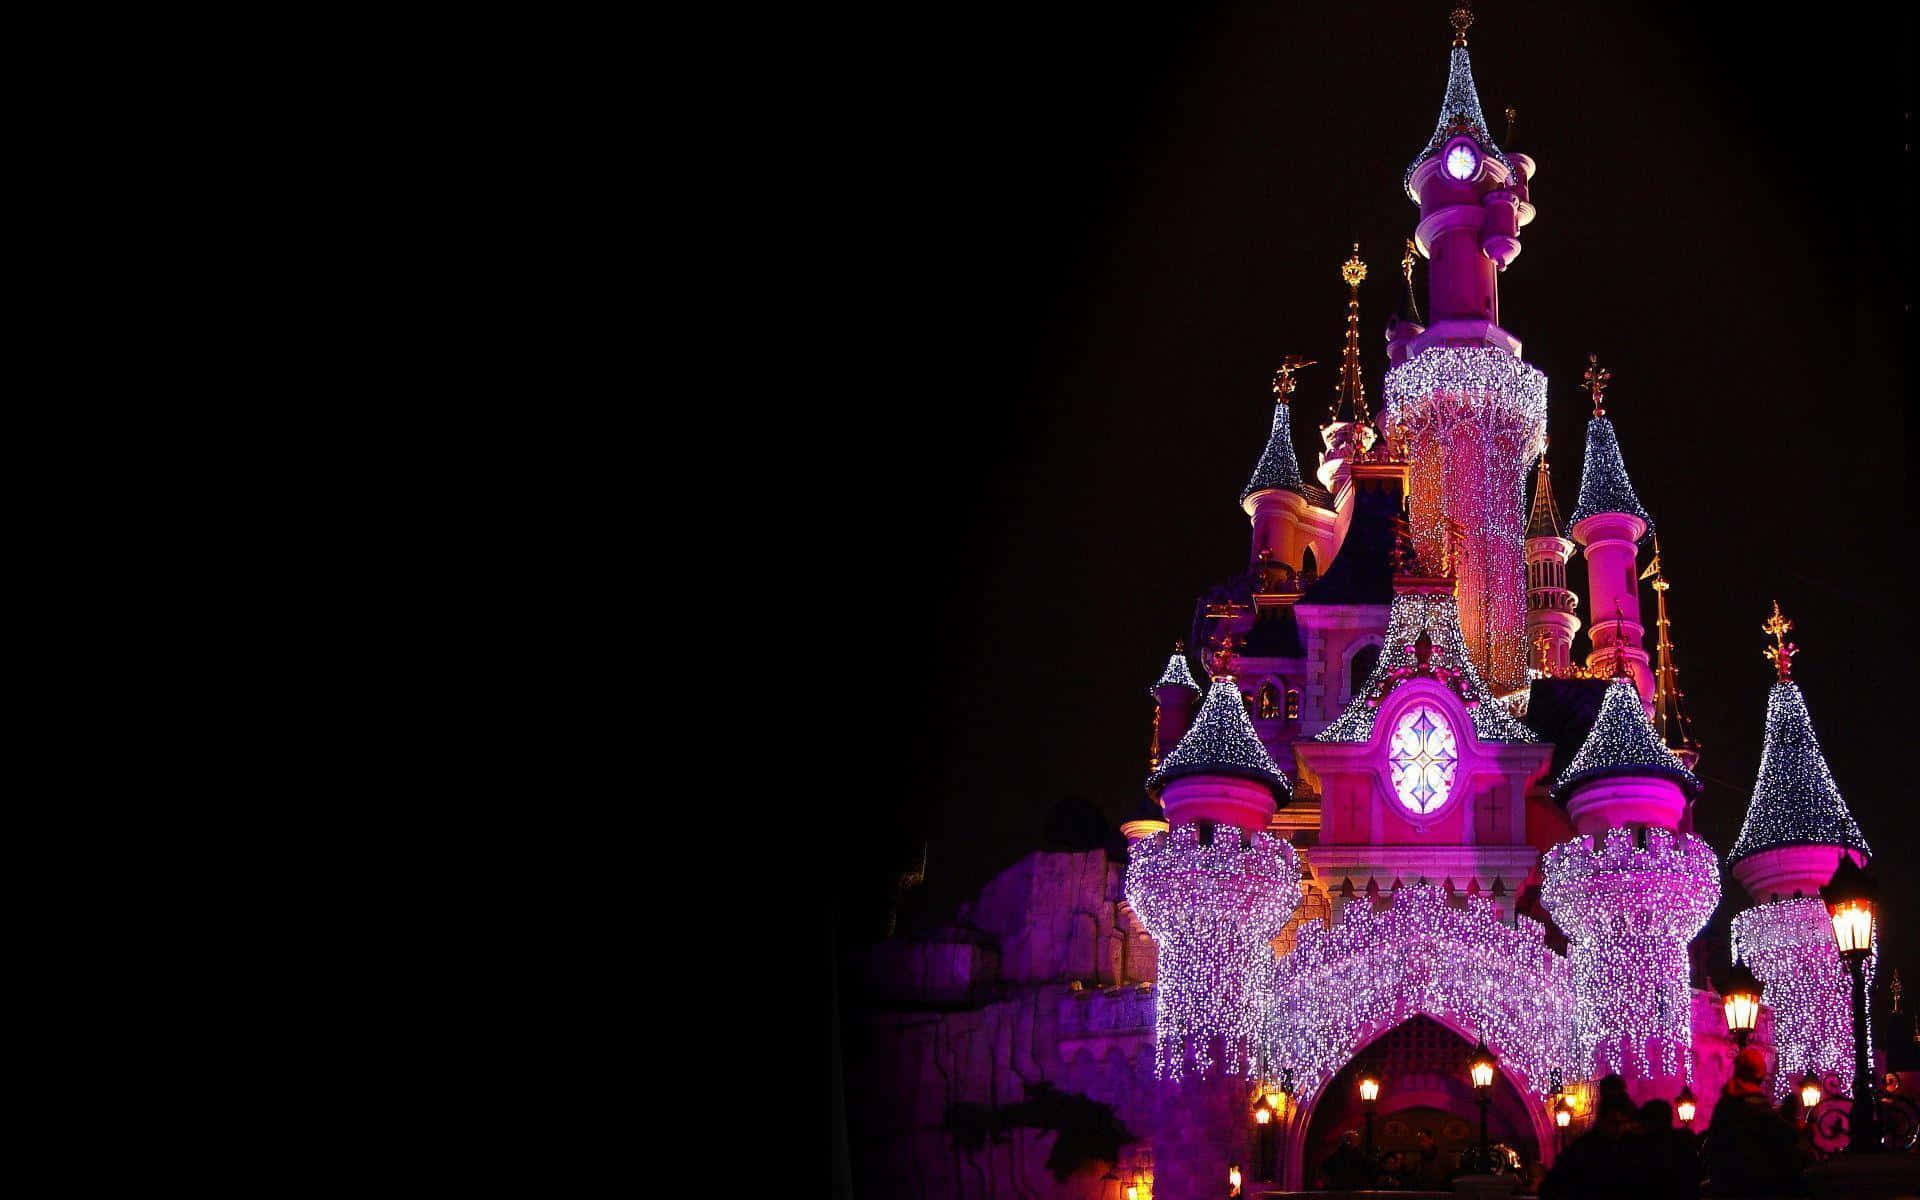 "Experience the Magic of Disneyland"